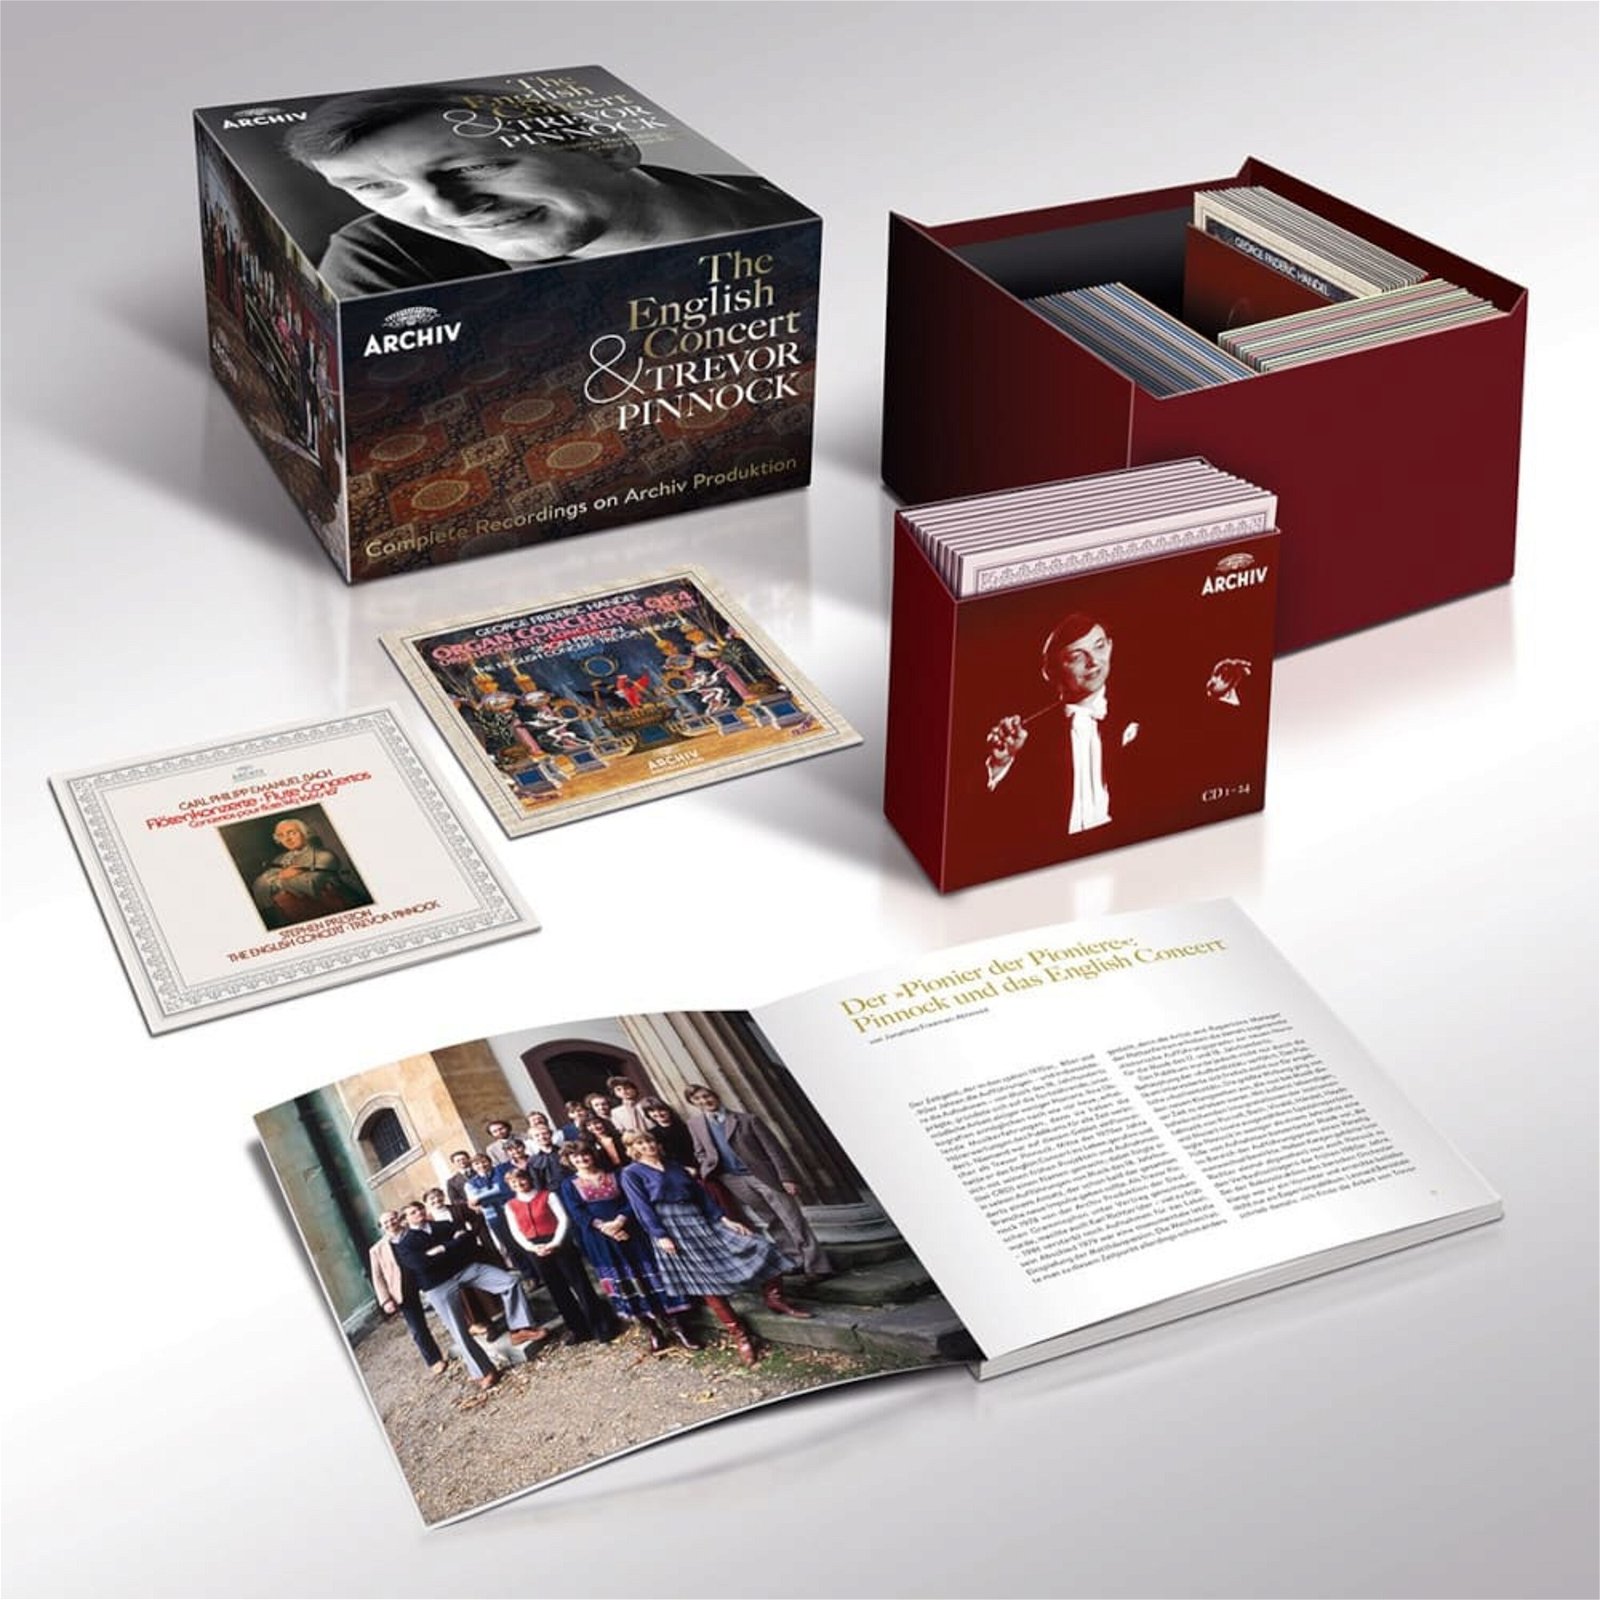 CD Shop - PINNOCK, TREVOR / THE ENG COMPLETE RECORDINGS ON ARCHIV PRODUKTION